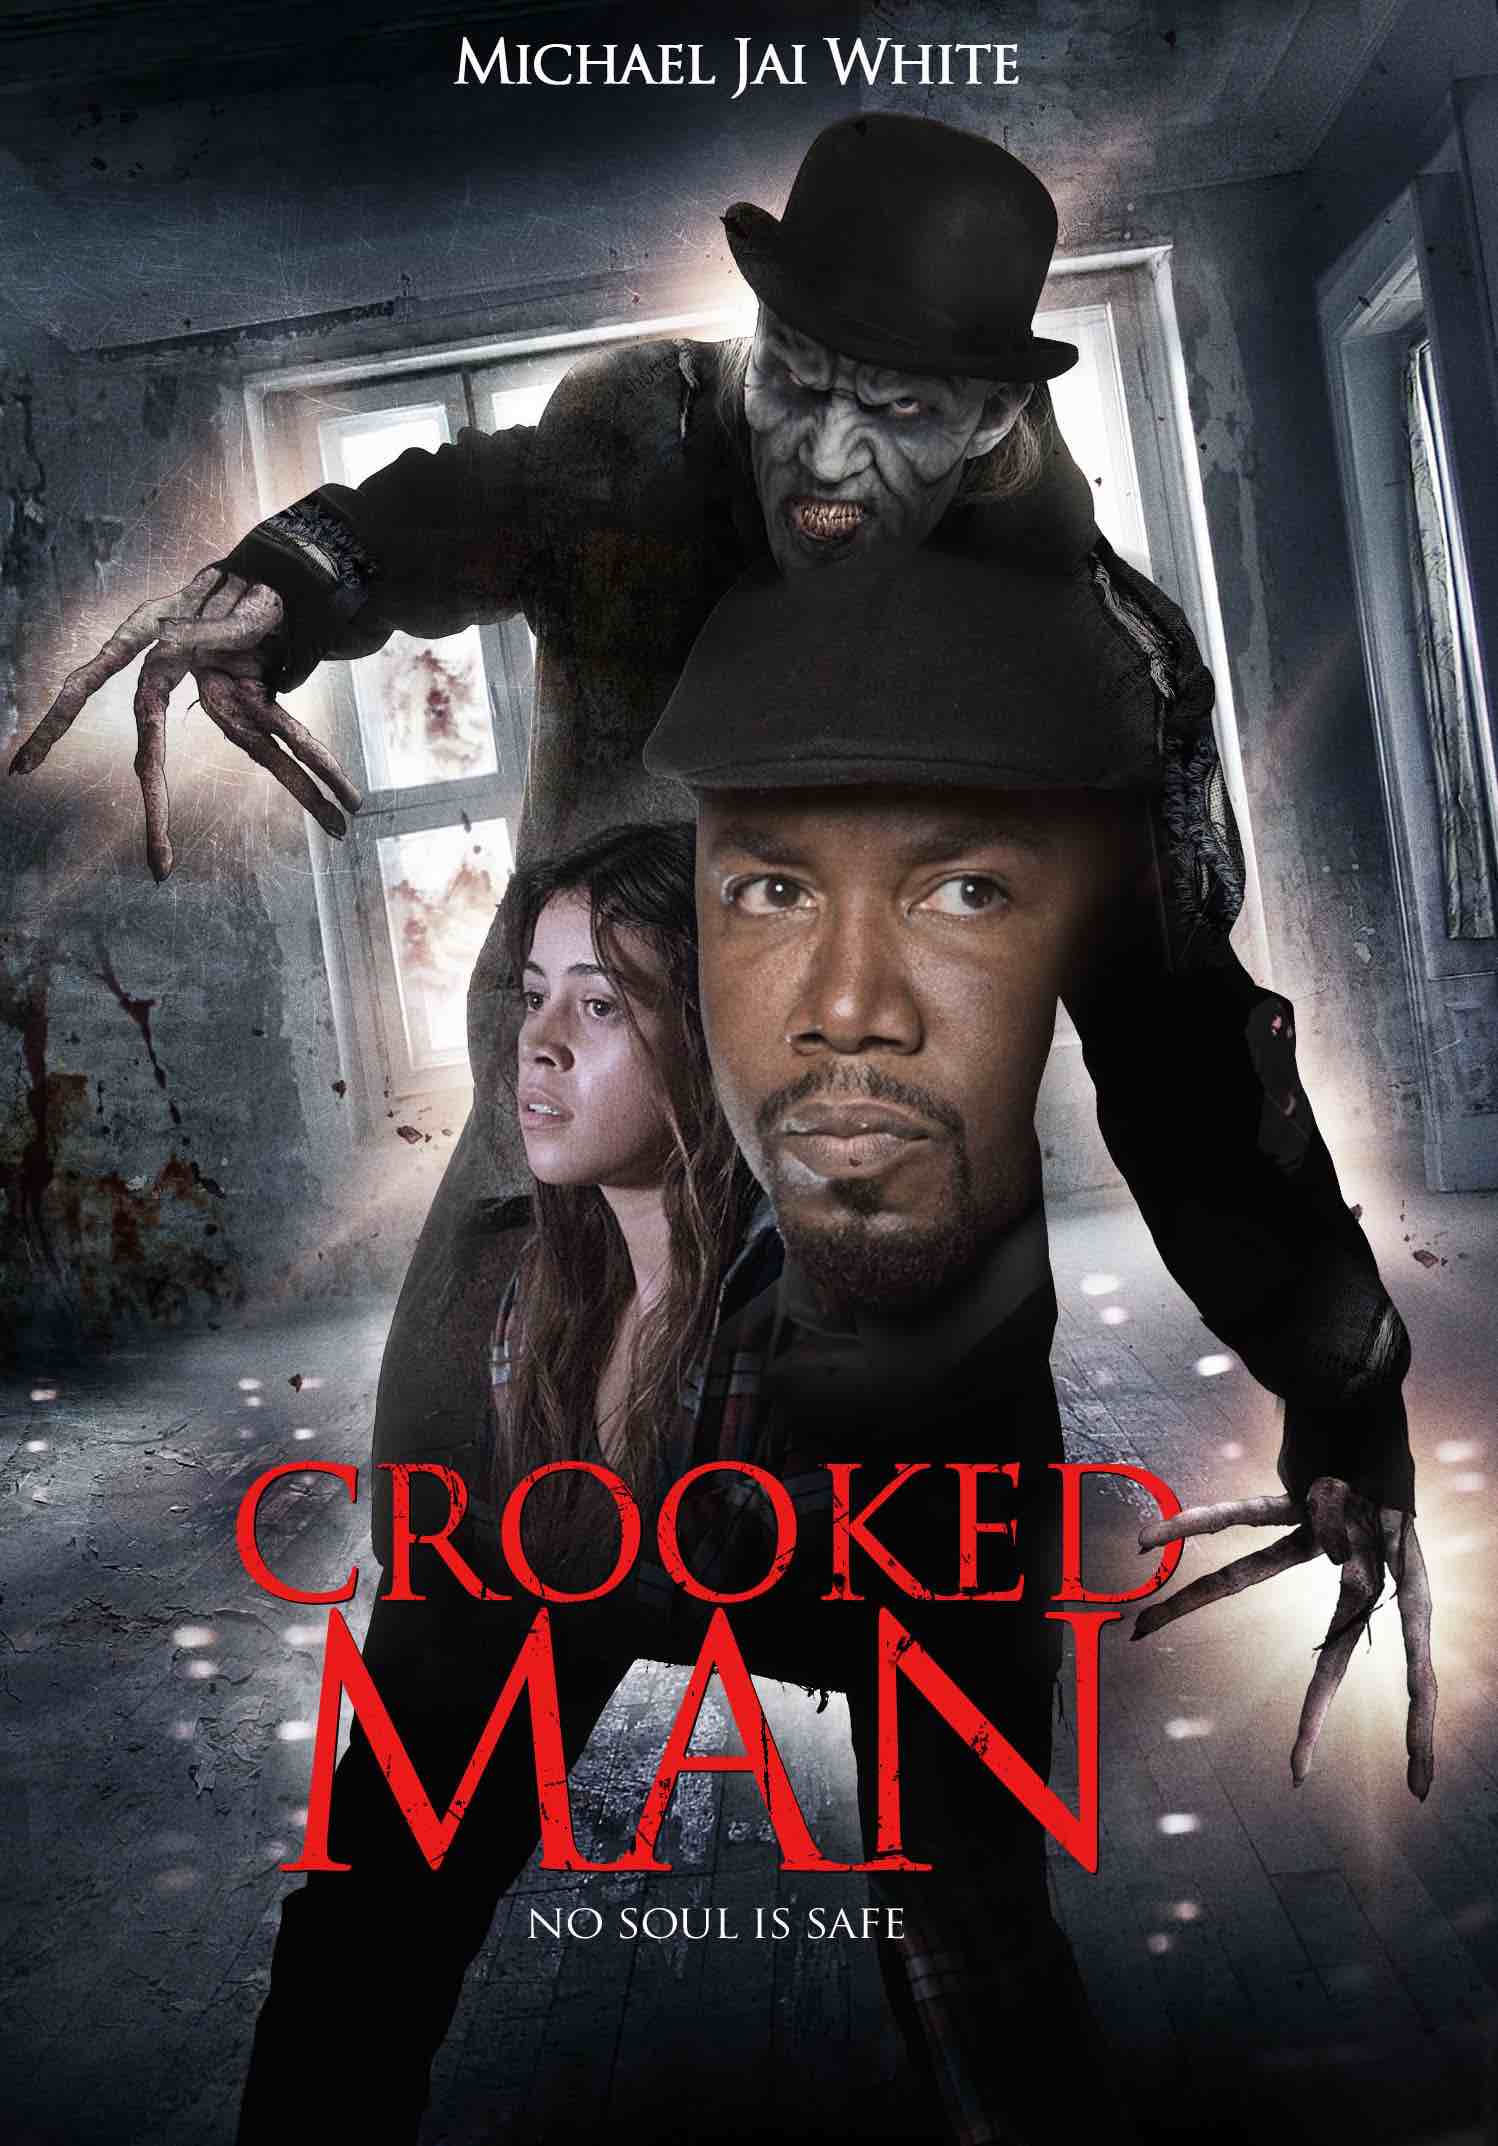 Nonton film The Crooked Man layarkaca21 indoxx1 ganool online streaming terbaru